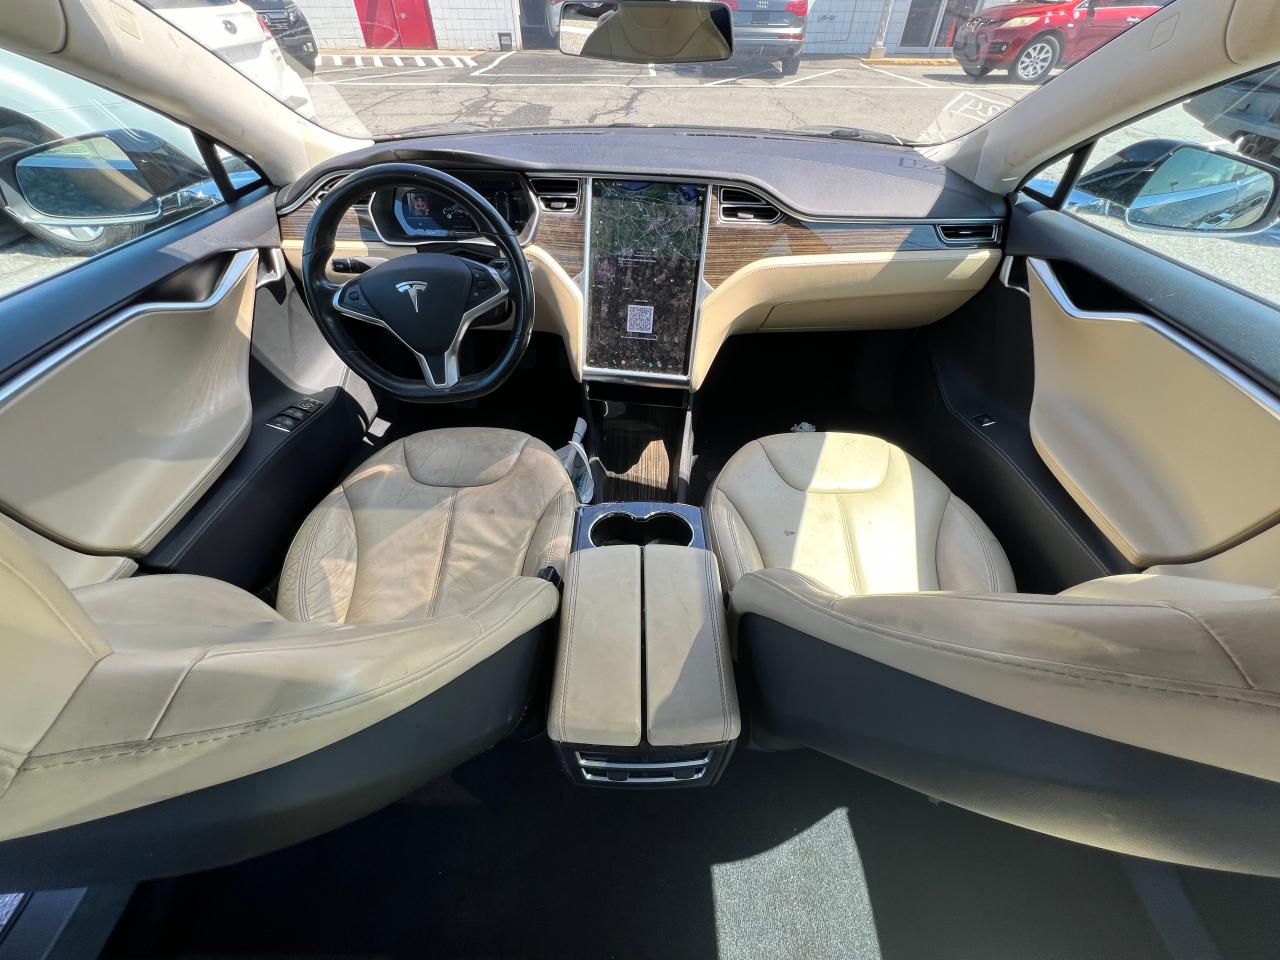 2015 Tesla Model S 60 vin: 5YJSA1S18FFP77067